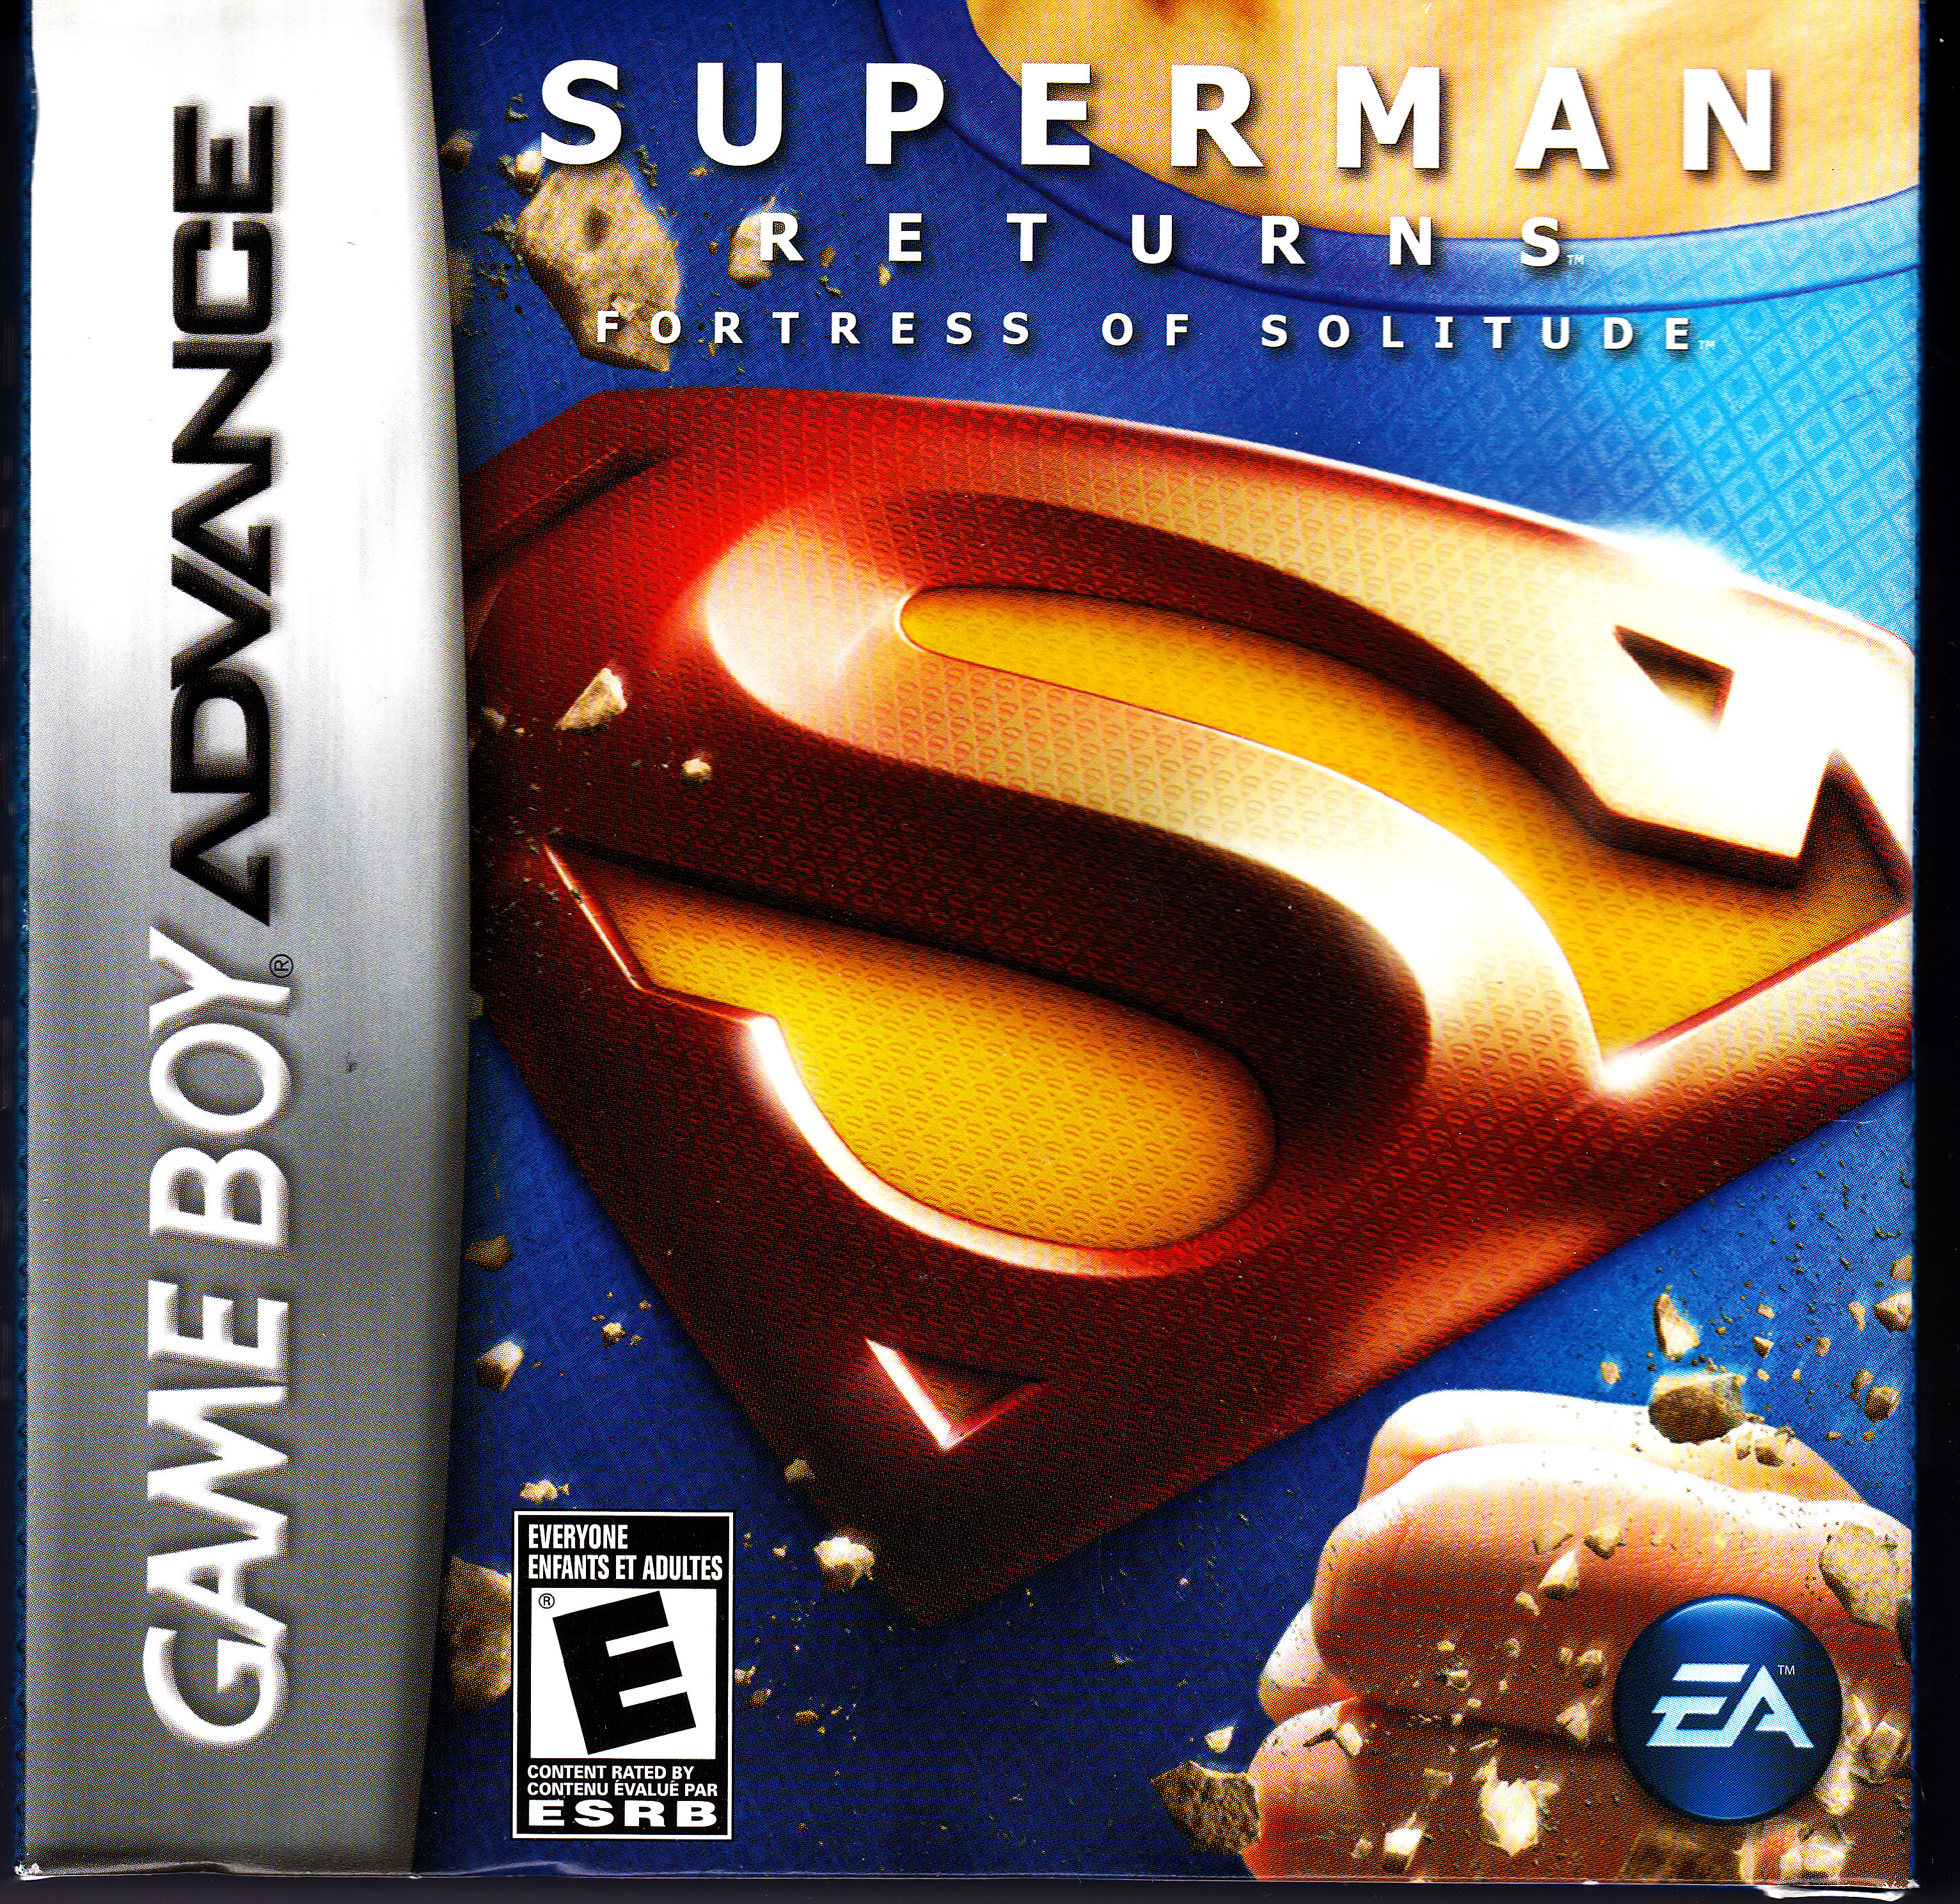 Super men games. Superman Returns game. Superman Returns 2006 игра. Payback GBA игра. Superman Returns Fortress of Solitude.